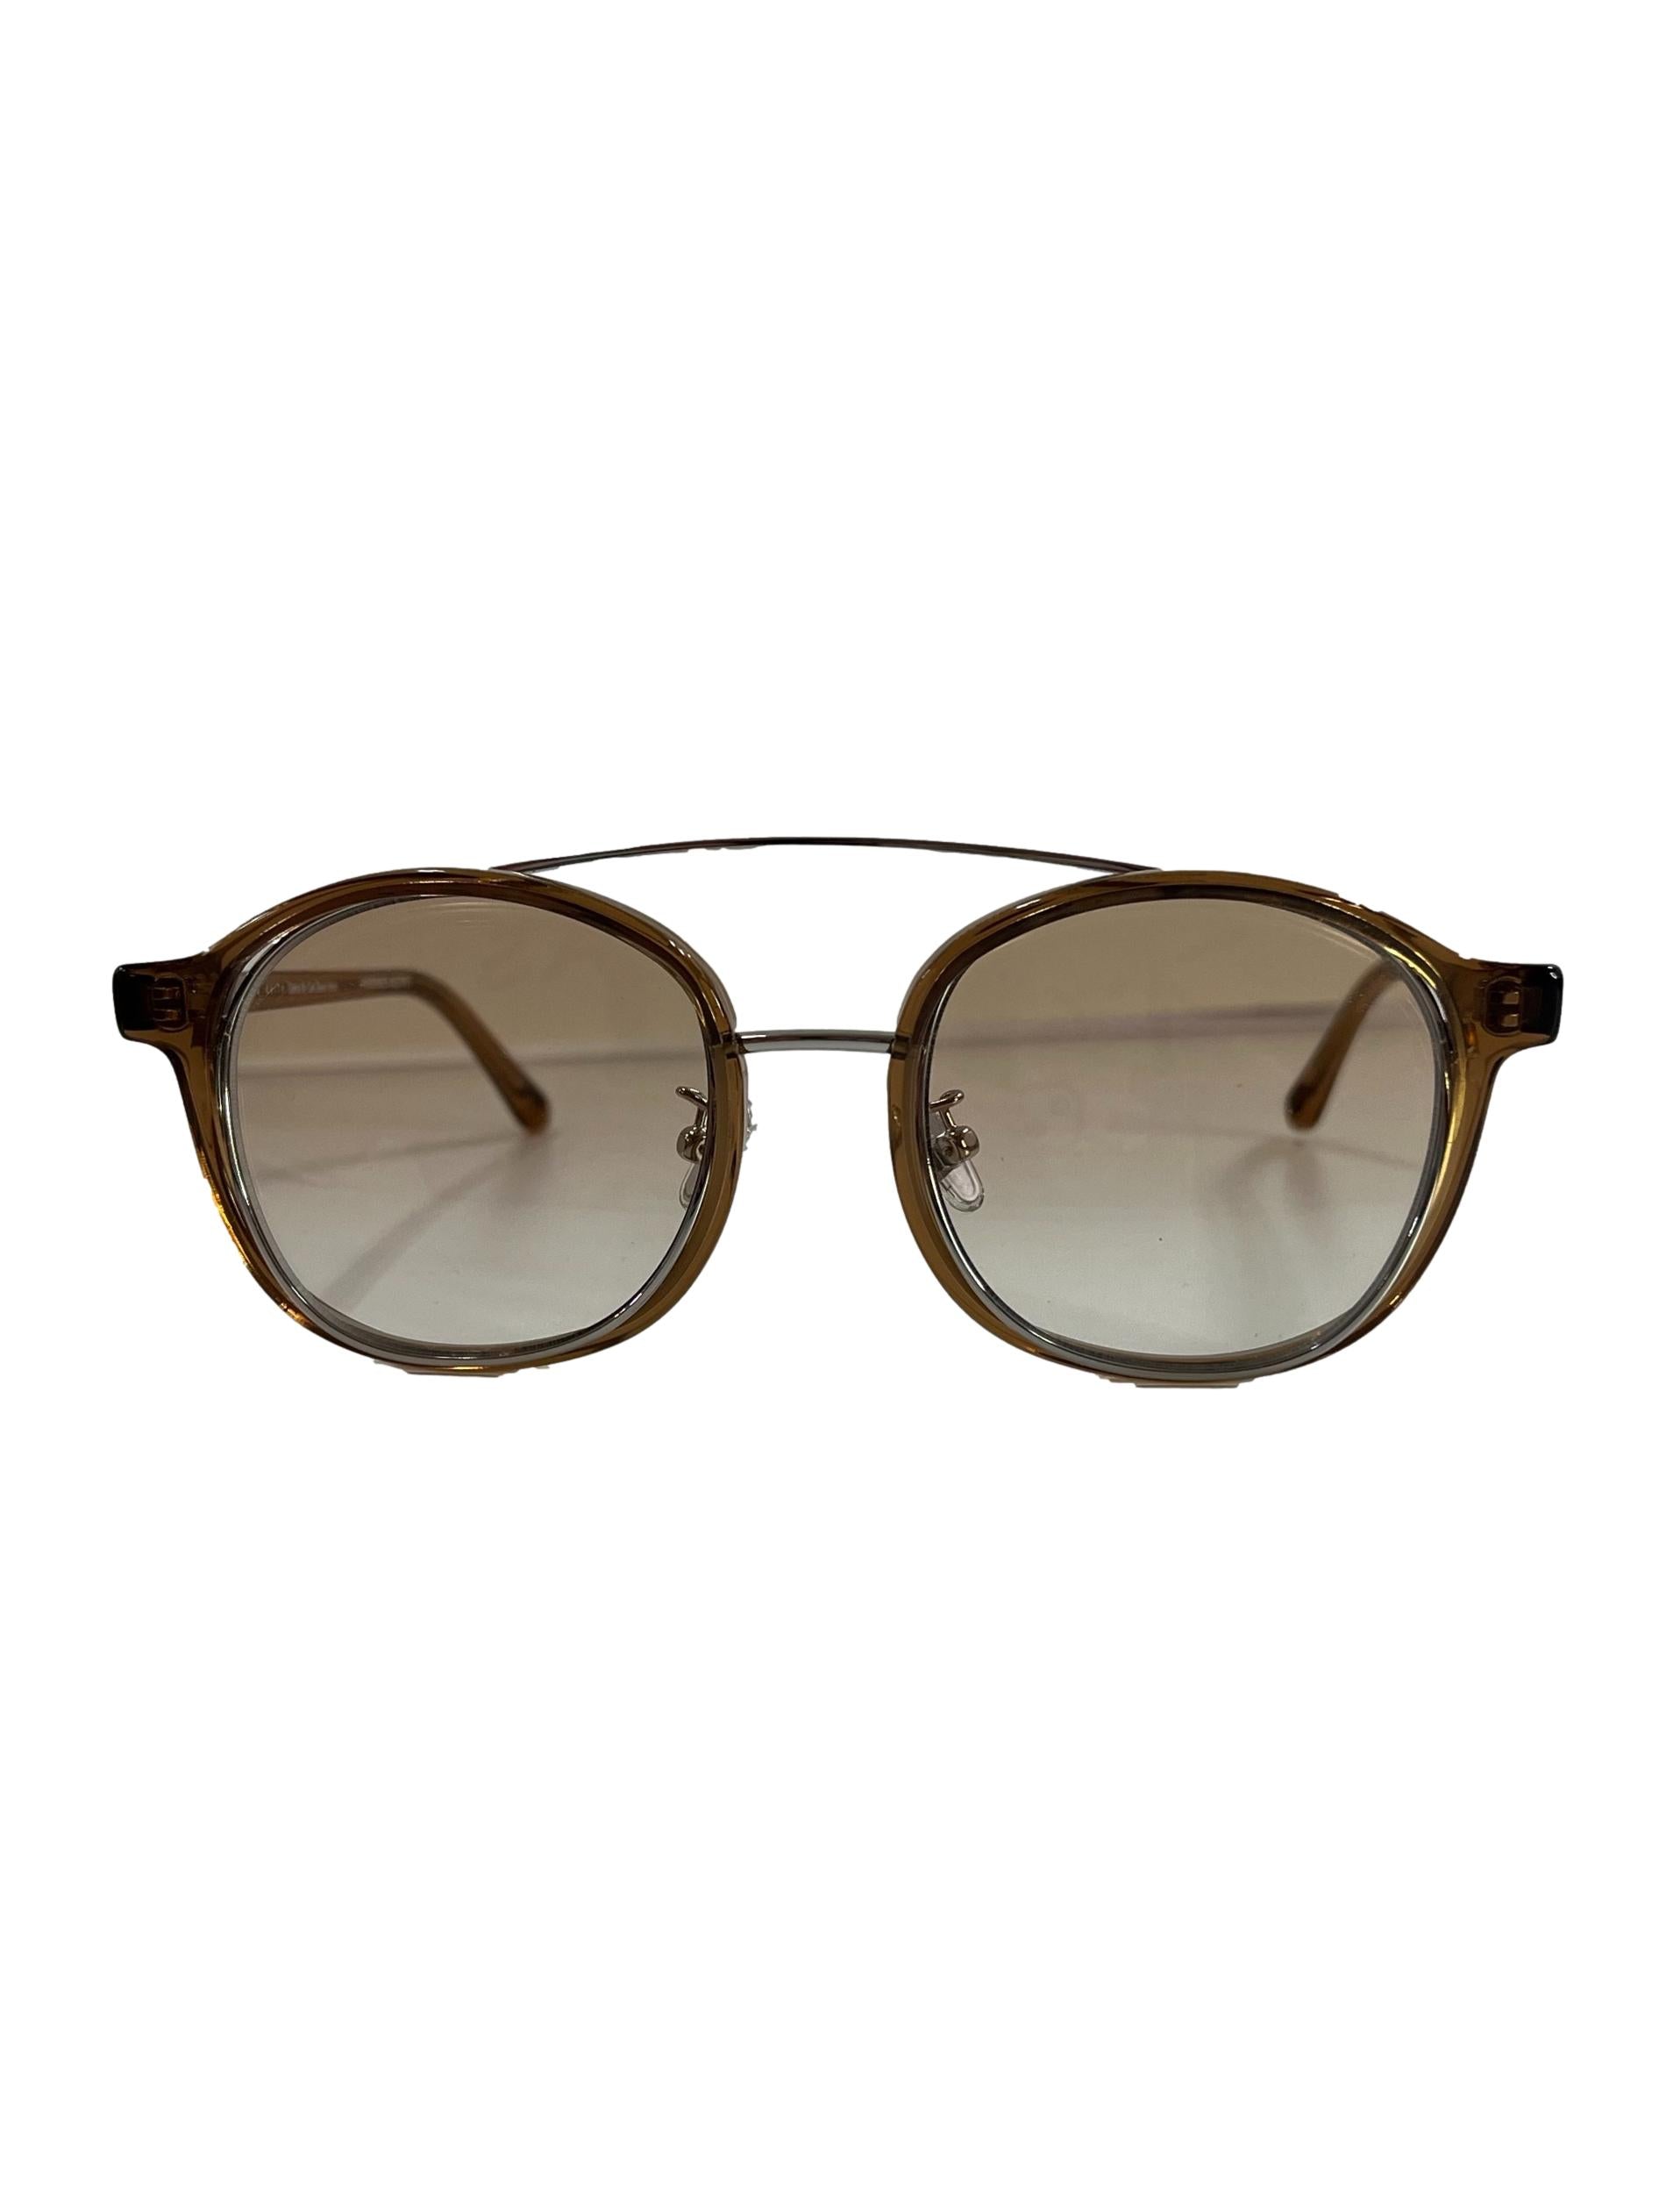 Clear Brown Aviator Sunglasses w/ Brown Bag Case